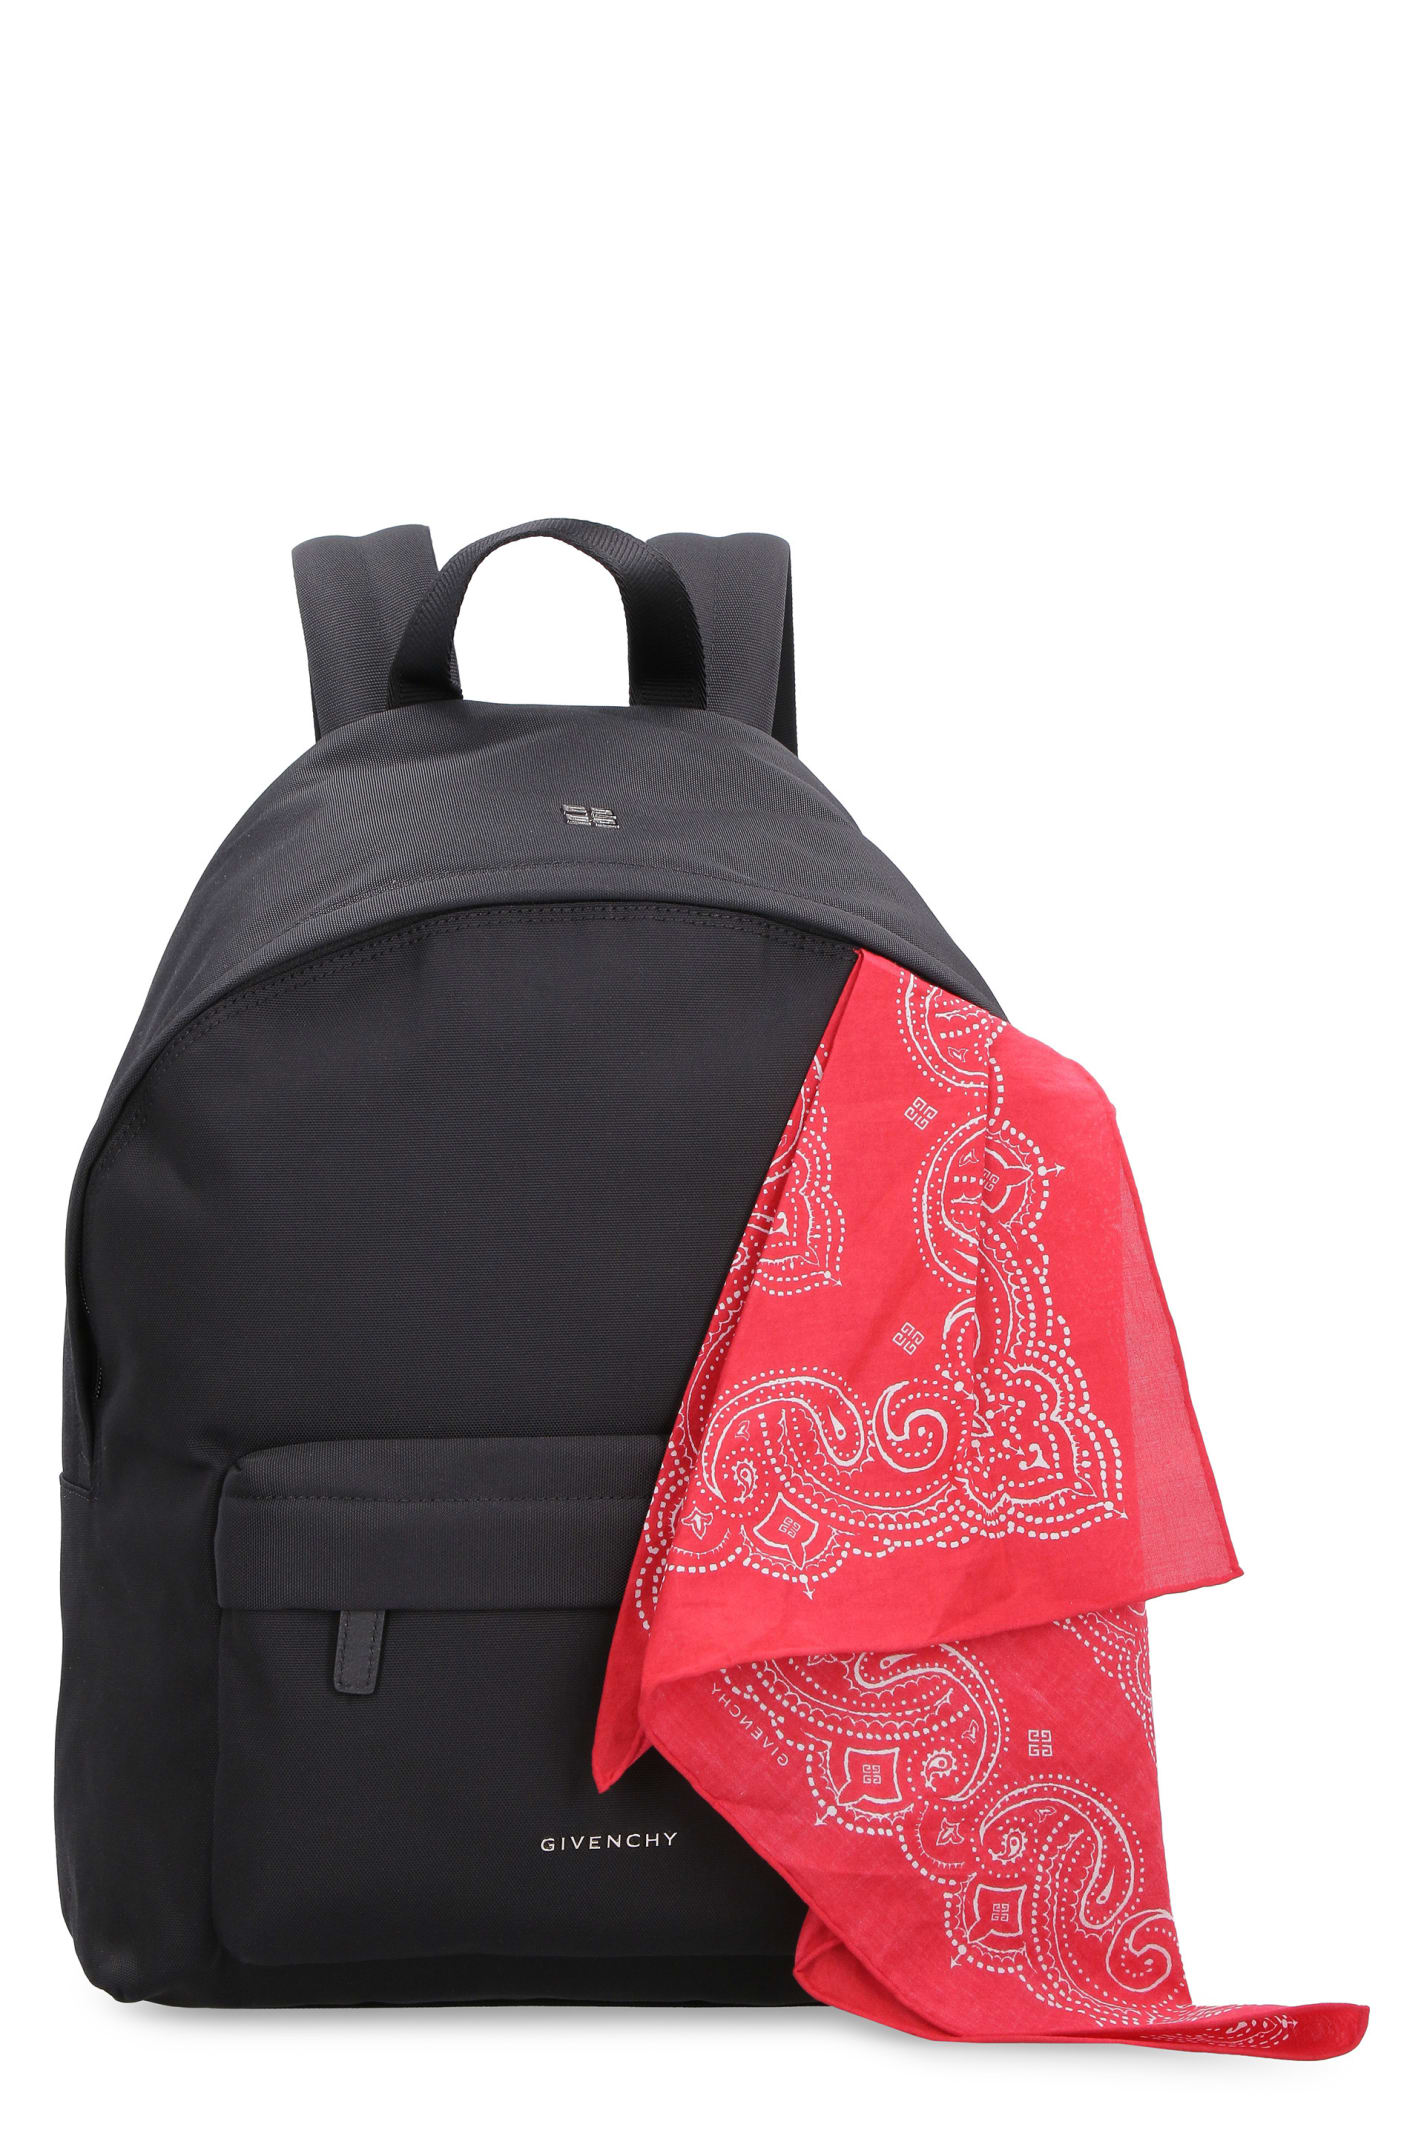 Givenchy Essentiel U Canvas Backpack